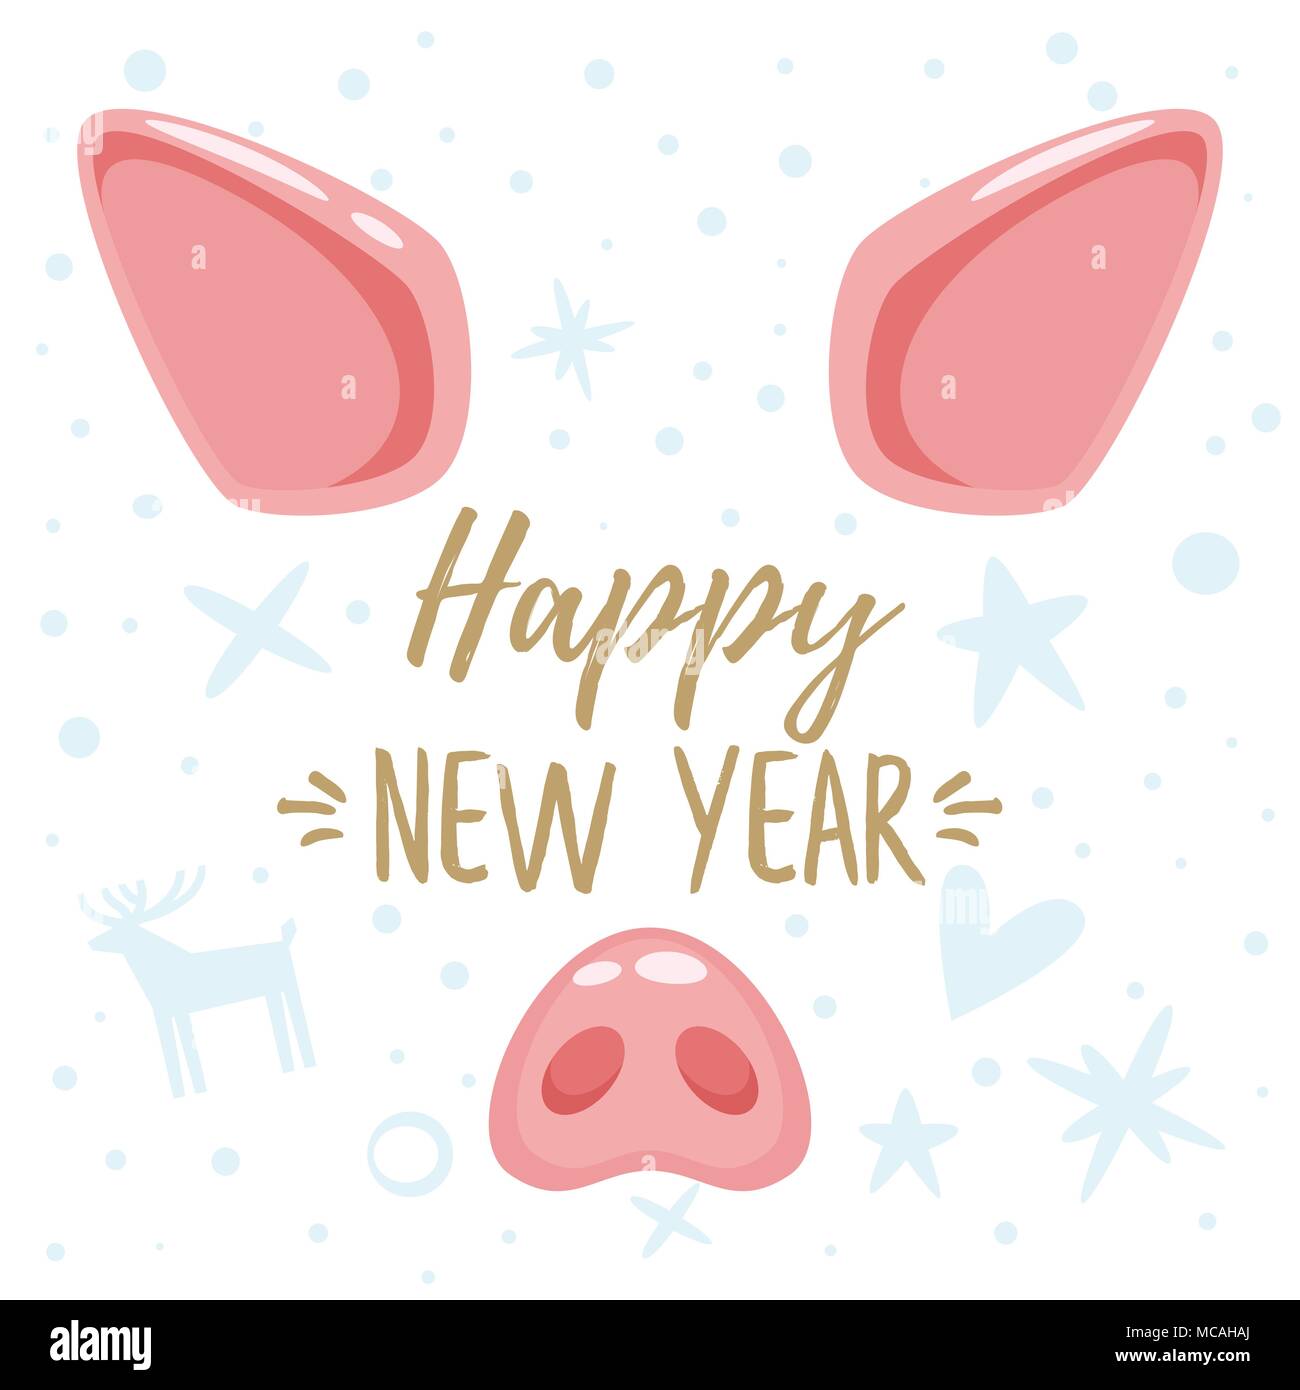 Chinese New Year 2019 Pig Stock Photos & Chinese New Year ...